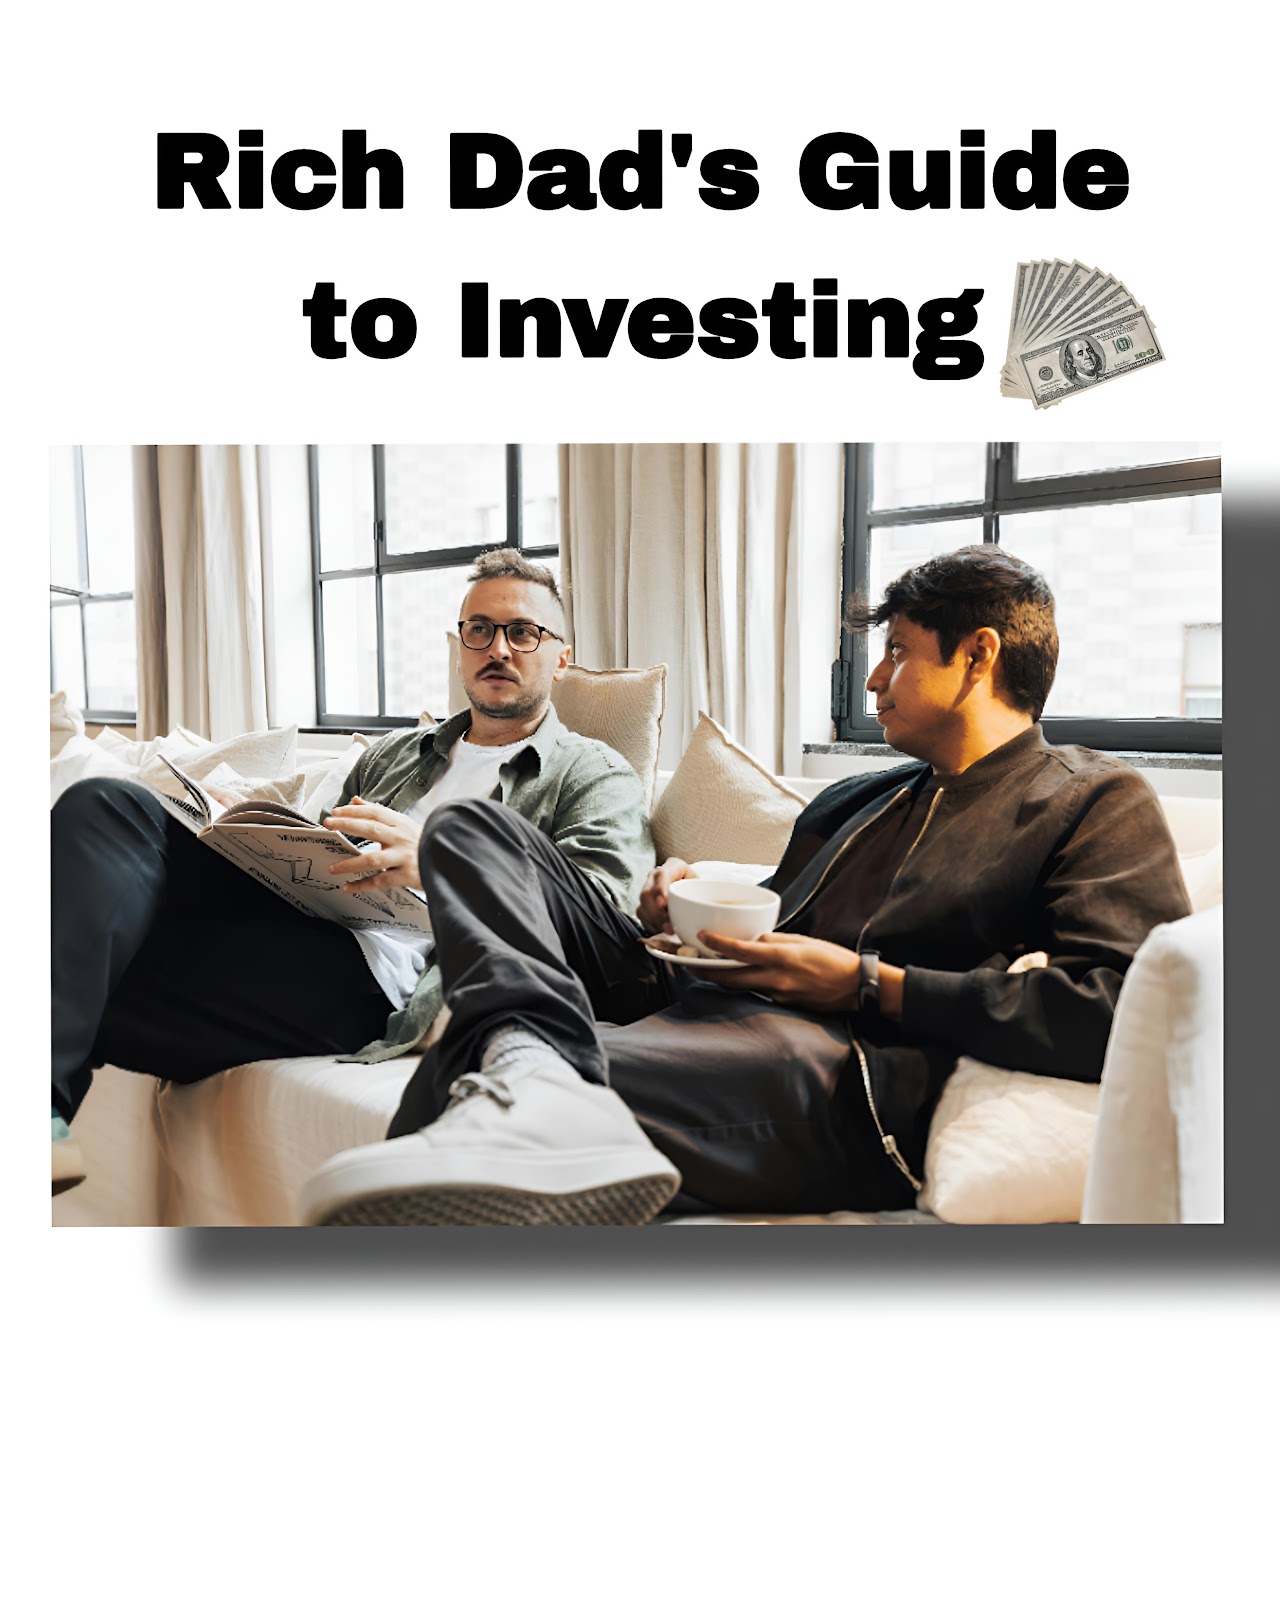 Rich Dad's Guide To Investing Summary Marathi - गुंतवणुकीसाठी श्रीमंत वडिलांचे मार्गदर्शन